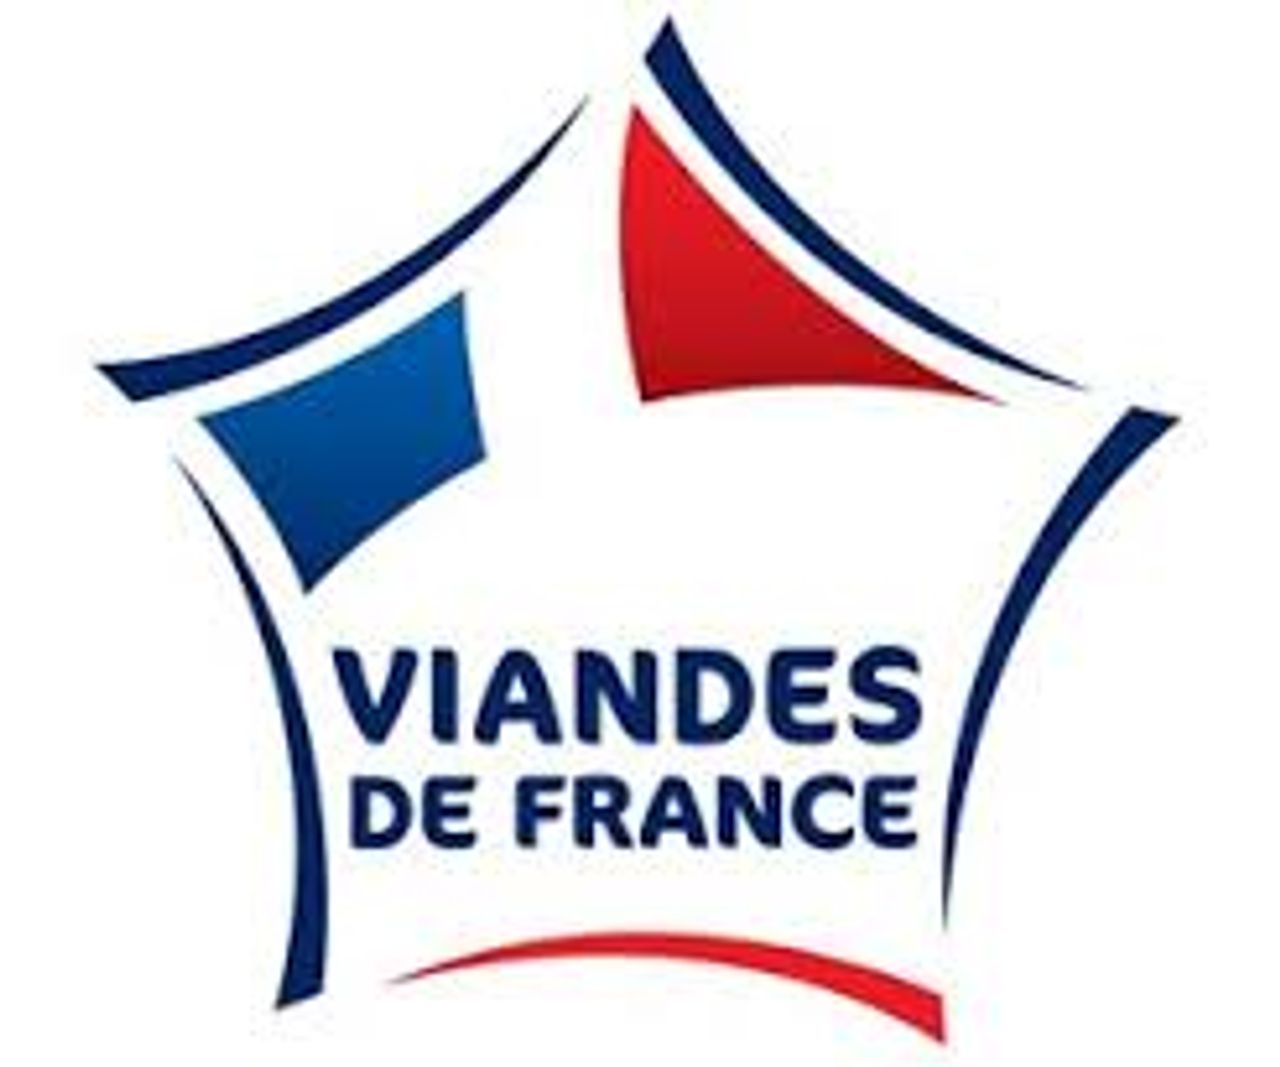 Le logo de Viandes de France